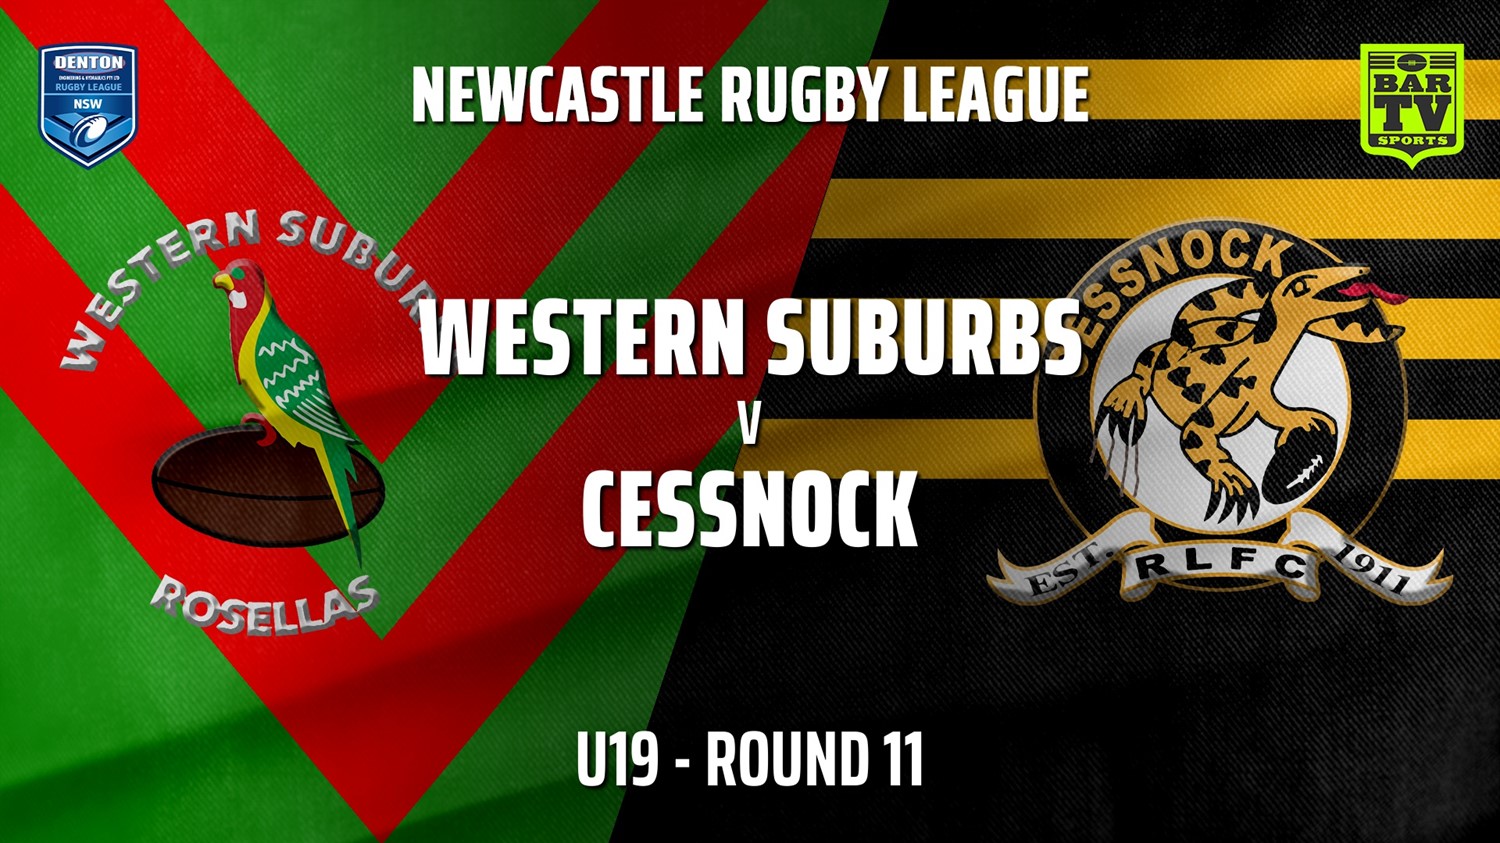 210612-Newcastle Round 11 - U19 - Western Suburbs Rosellas v Cessnock Goannas Slate Image